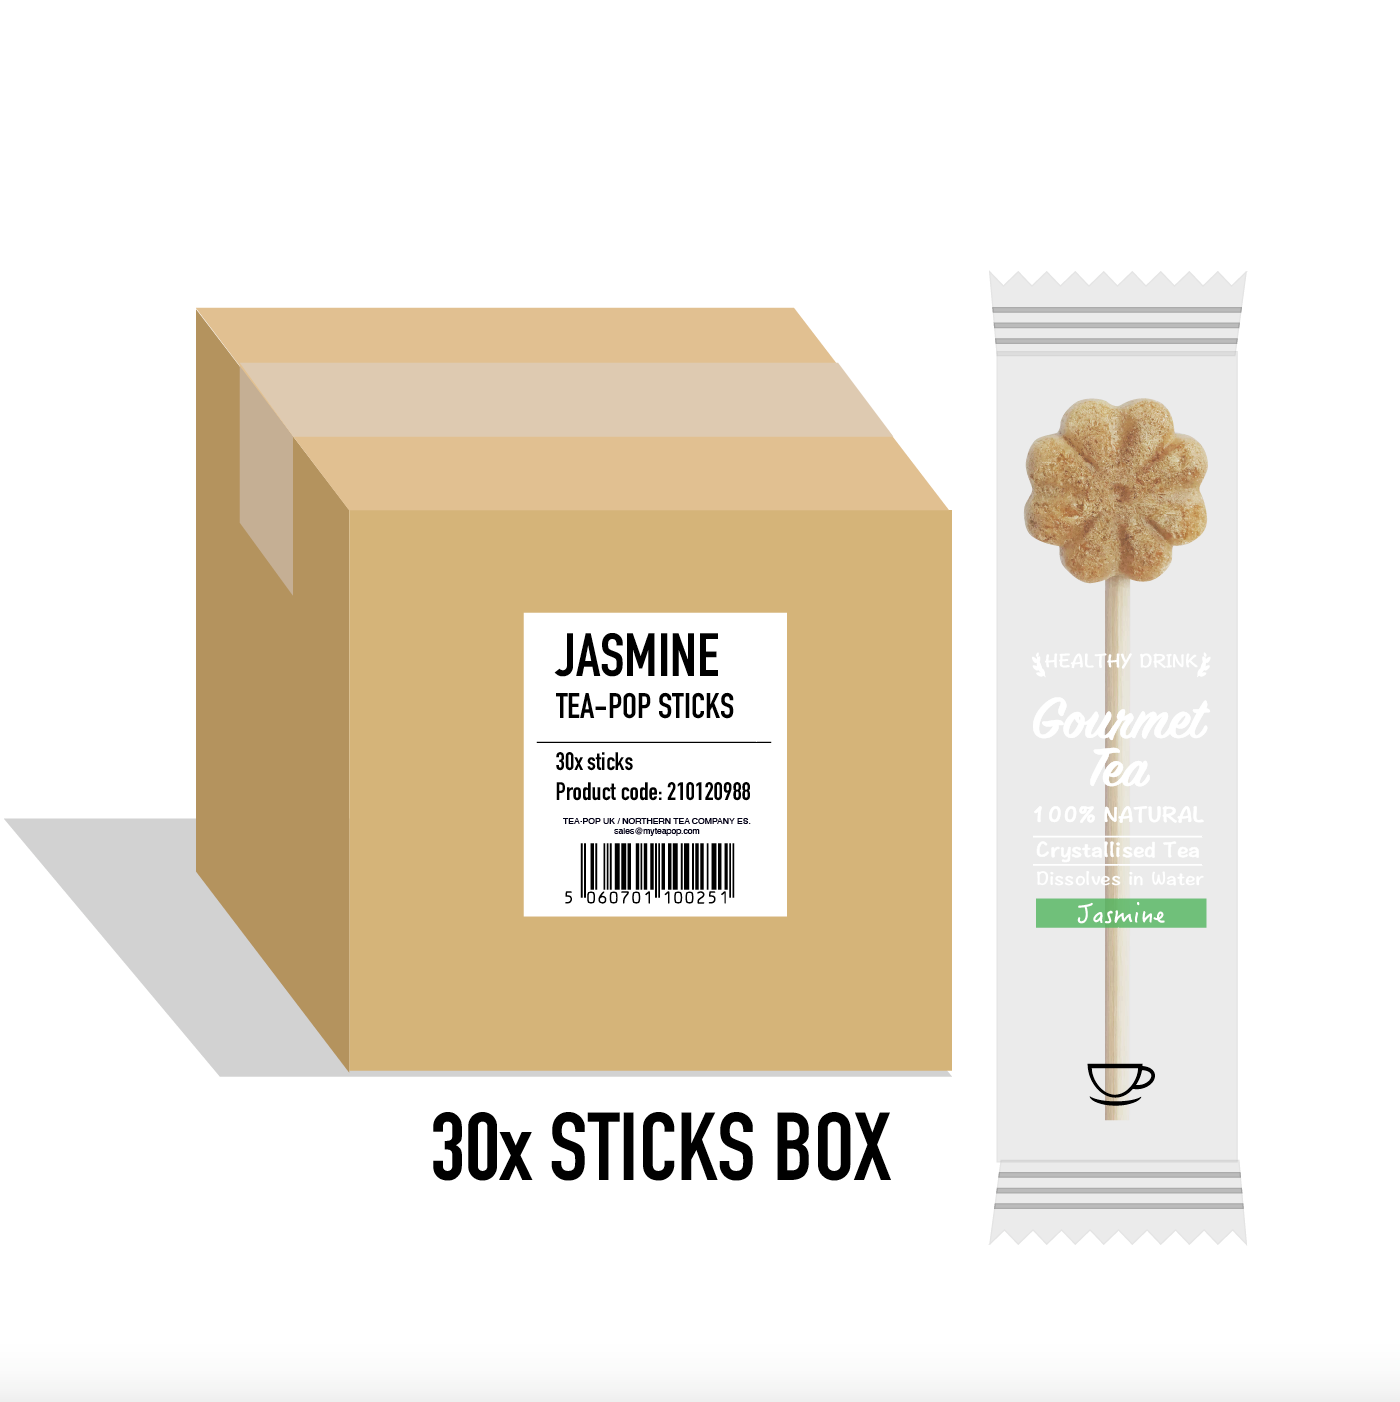 TP1-01 Jasmine Green TEA On-A-Stick! / 20x sticks tray / Wholesale Price